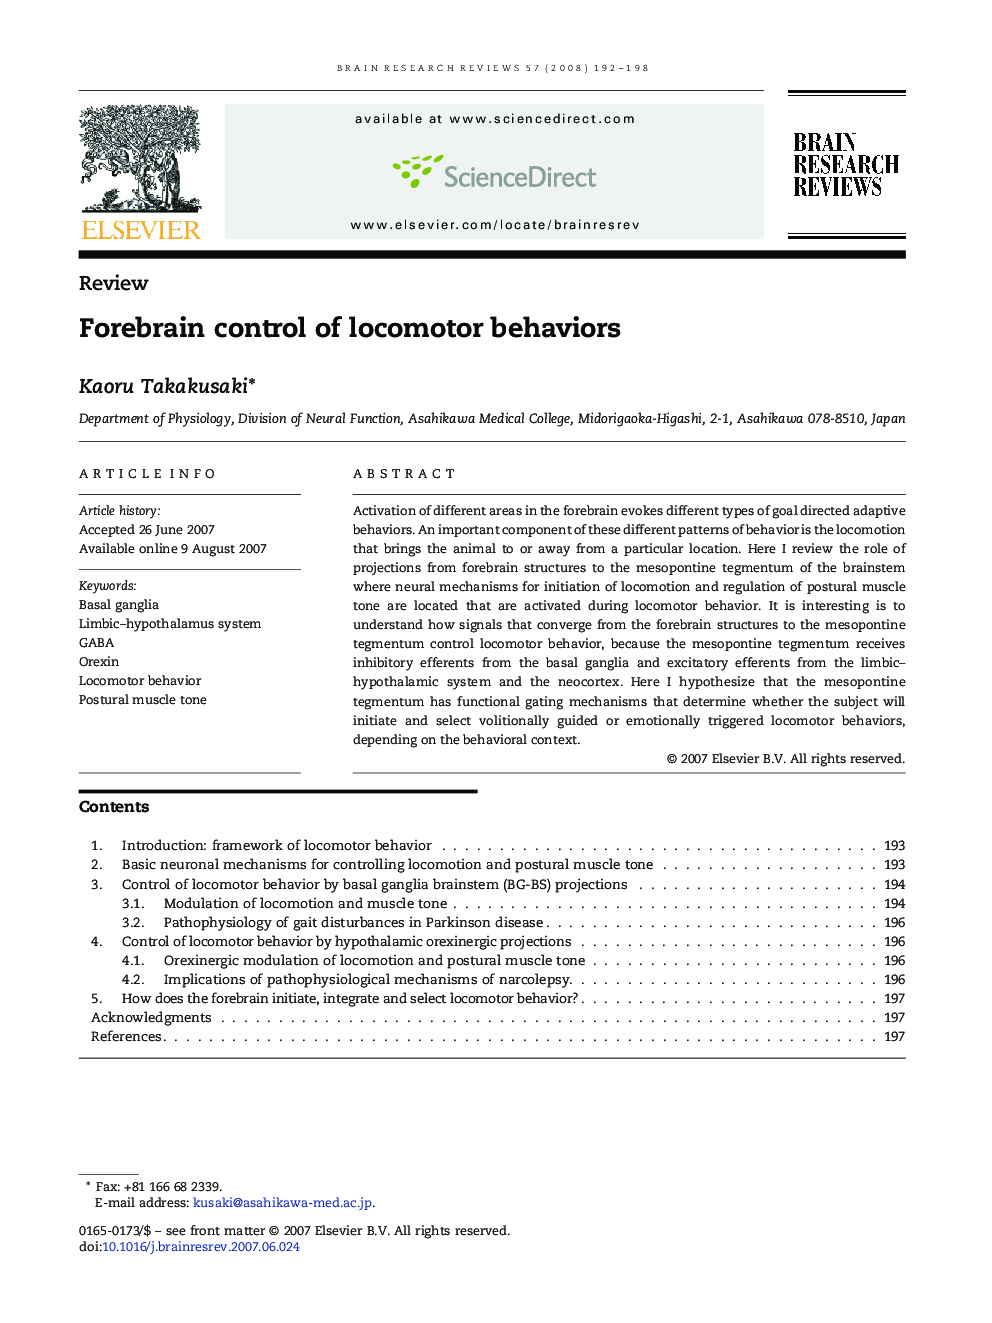 Forebrain control of locomotor behaviors